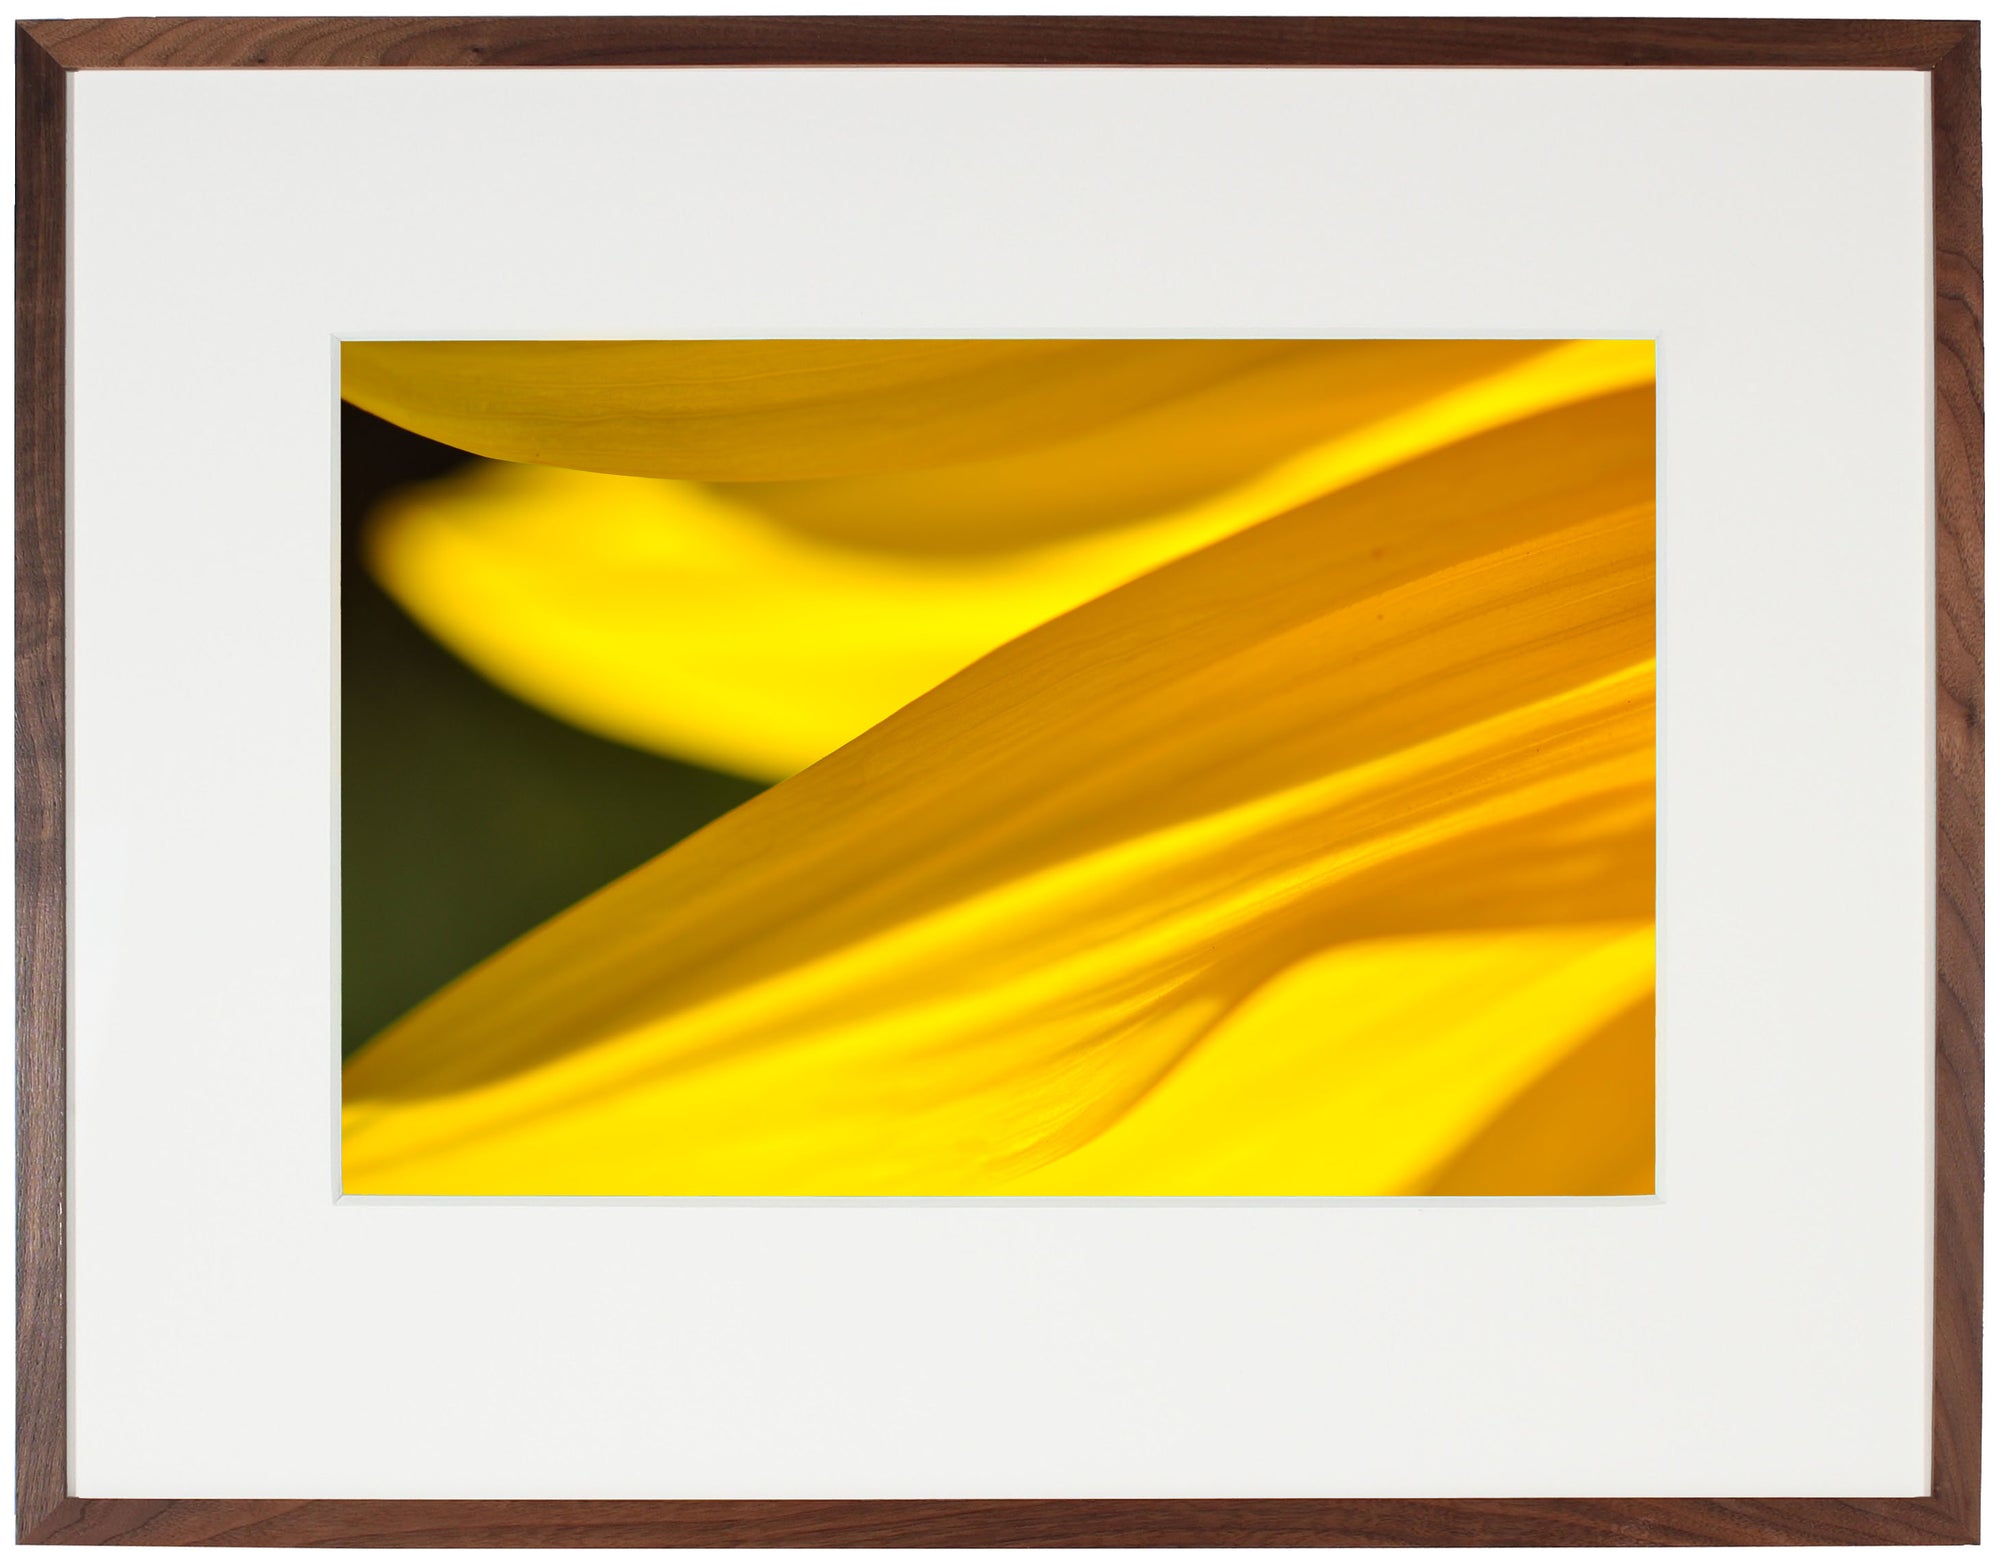 <I>Grand-Soleil (Sunflower)</I><br>Mendocino, California, 2012<br><br>GC0289